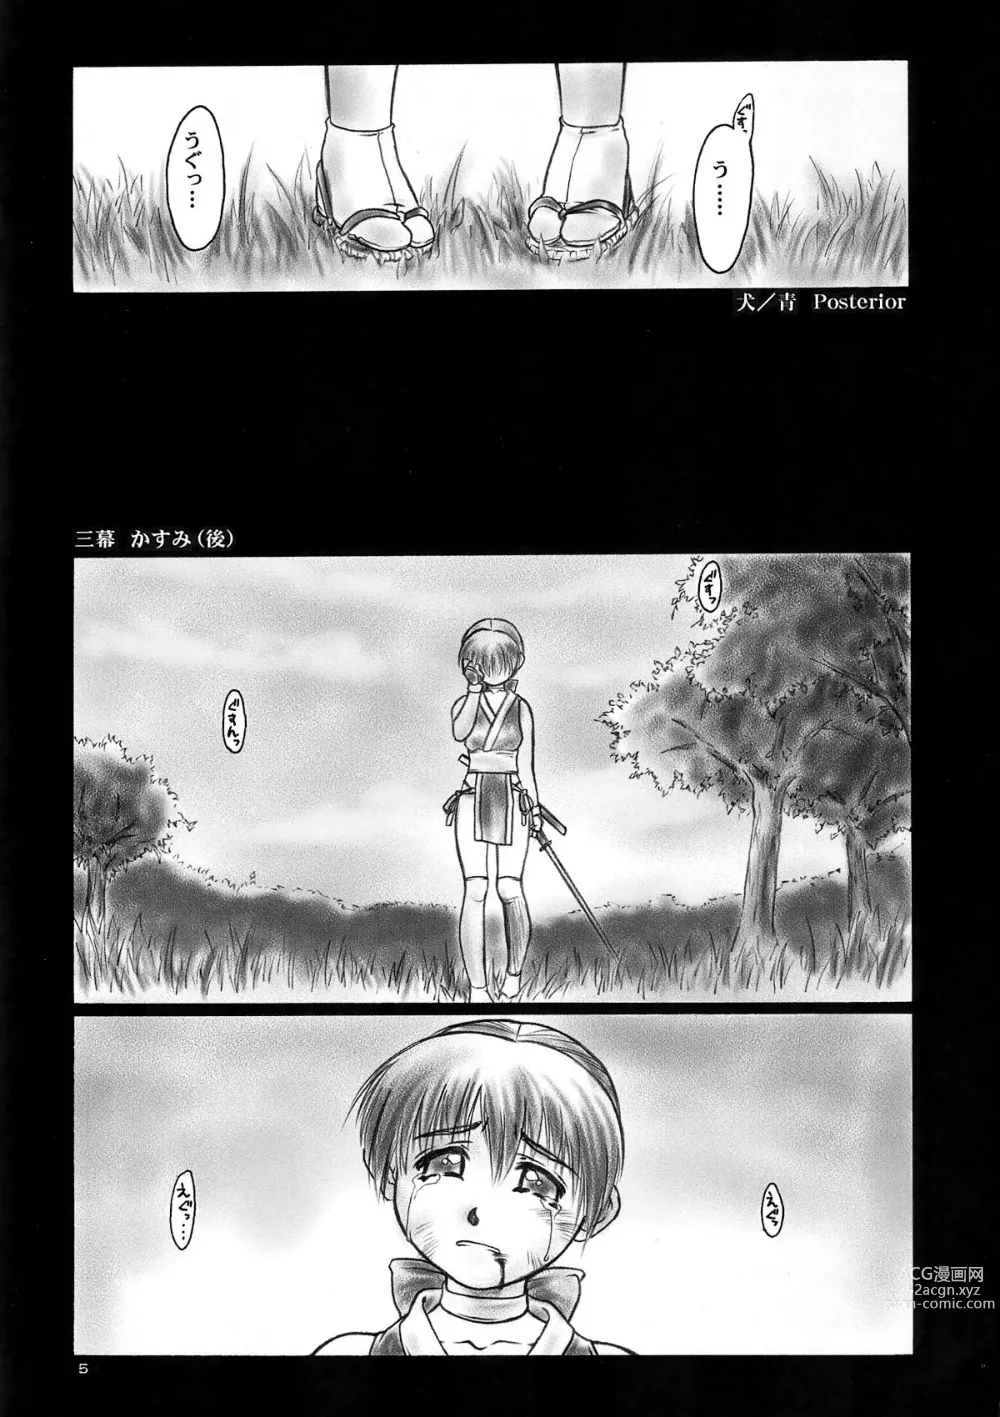 Page 4 of doujinshi INU/AO Posterior (decensored)